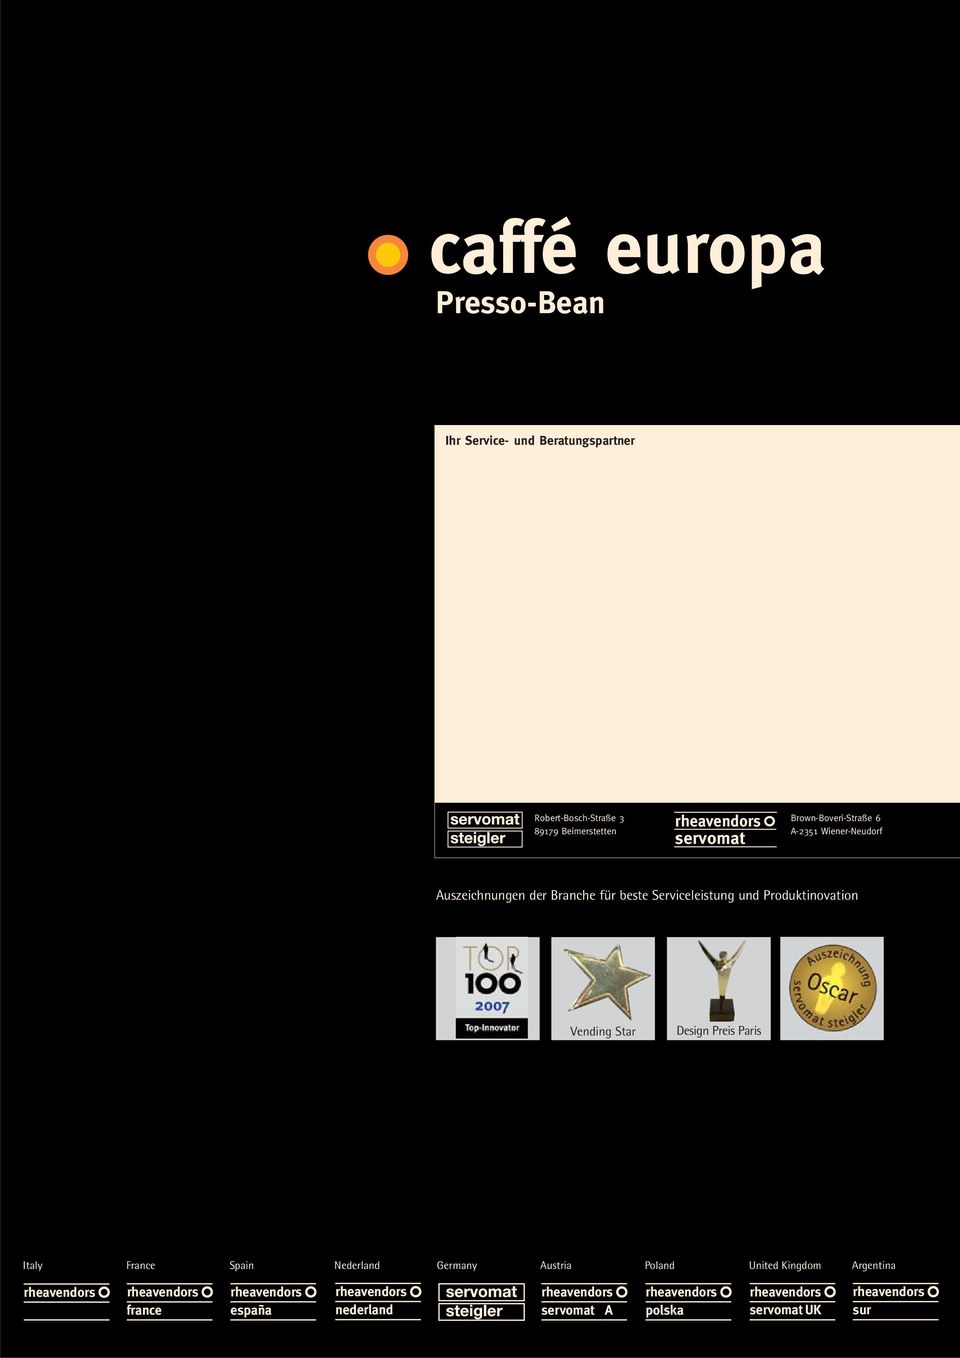 Serviceleistung und Produktinovation Vending Star Design Preis Paris Italy France Spain